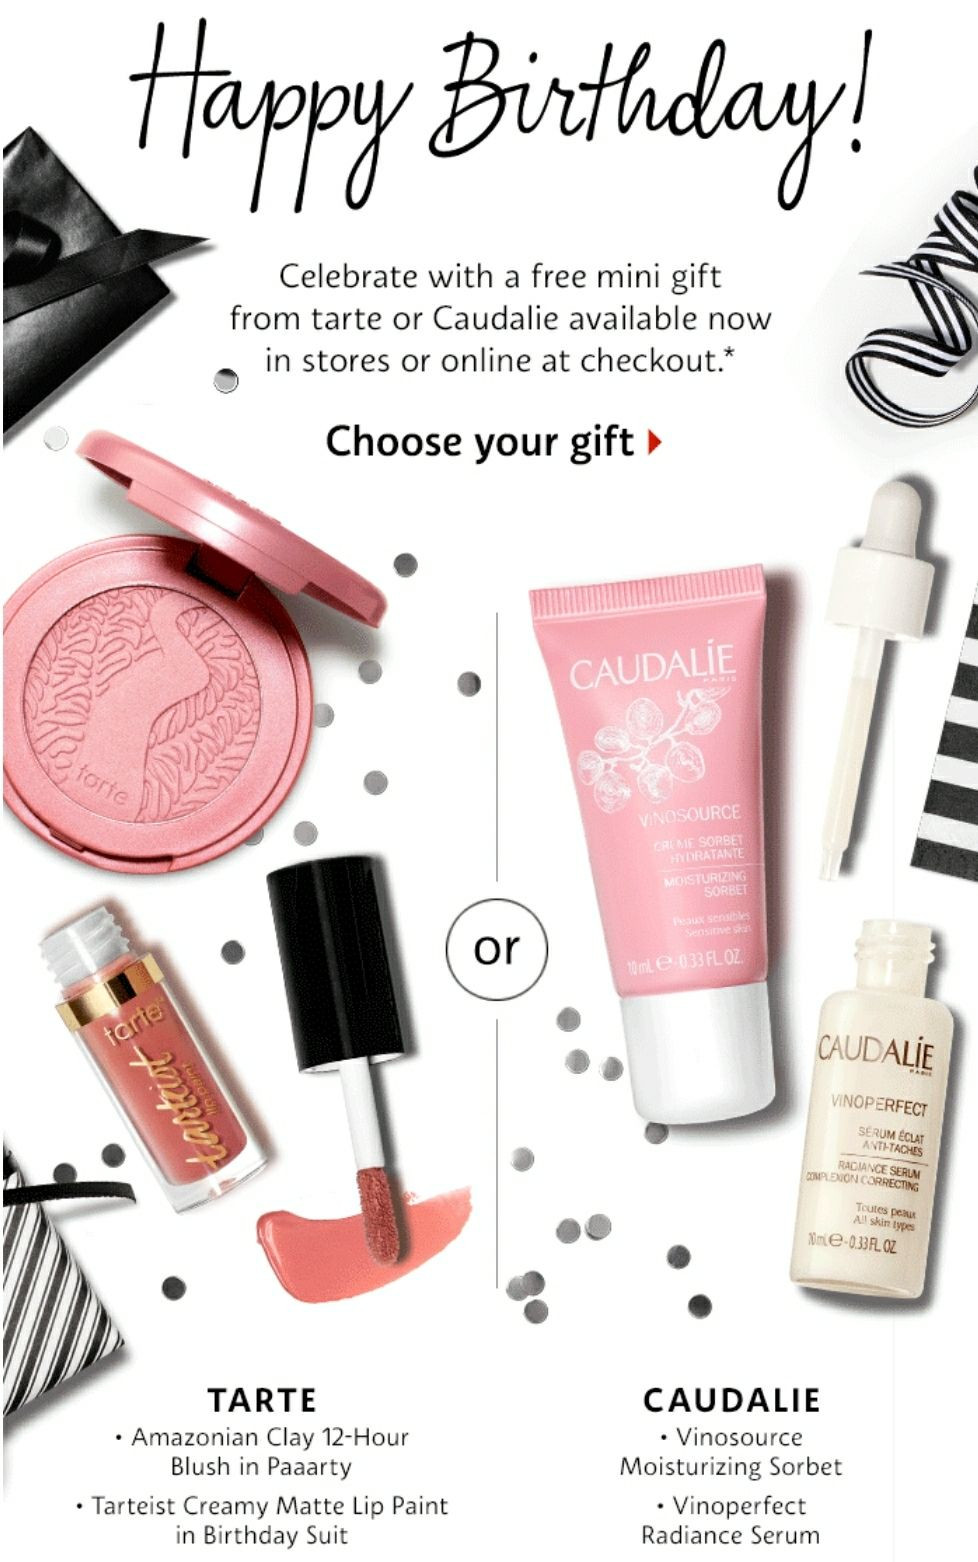 Sephora Birthday Gift Online
 What is the 2017 birthday t Beauty Insider munity